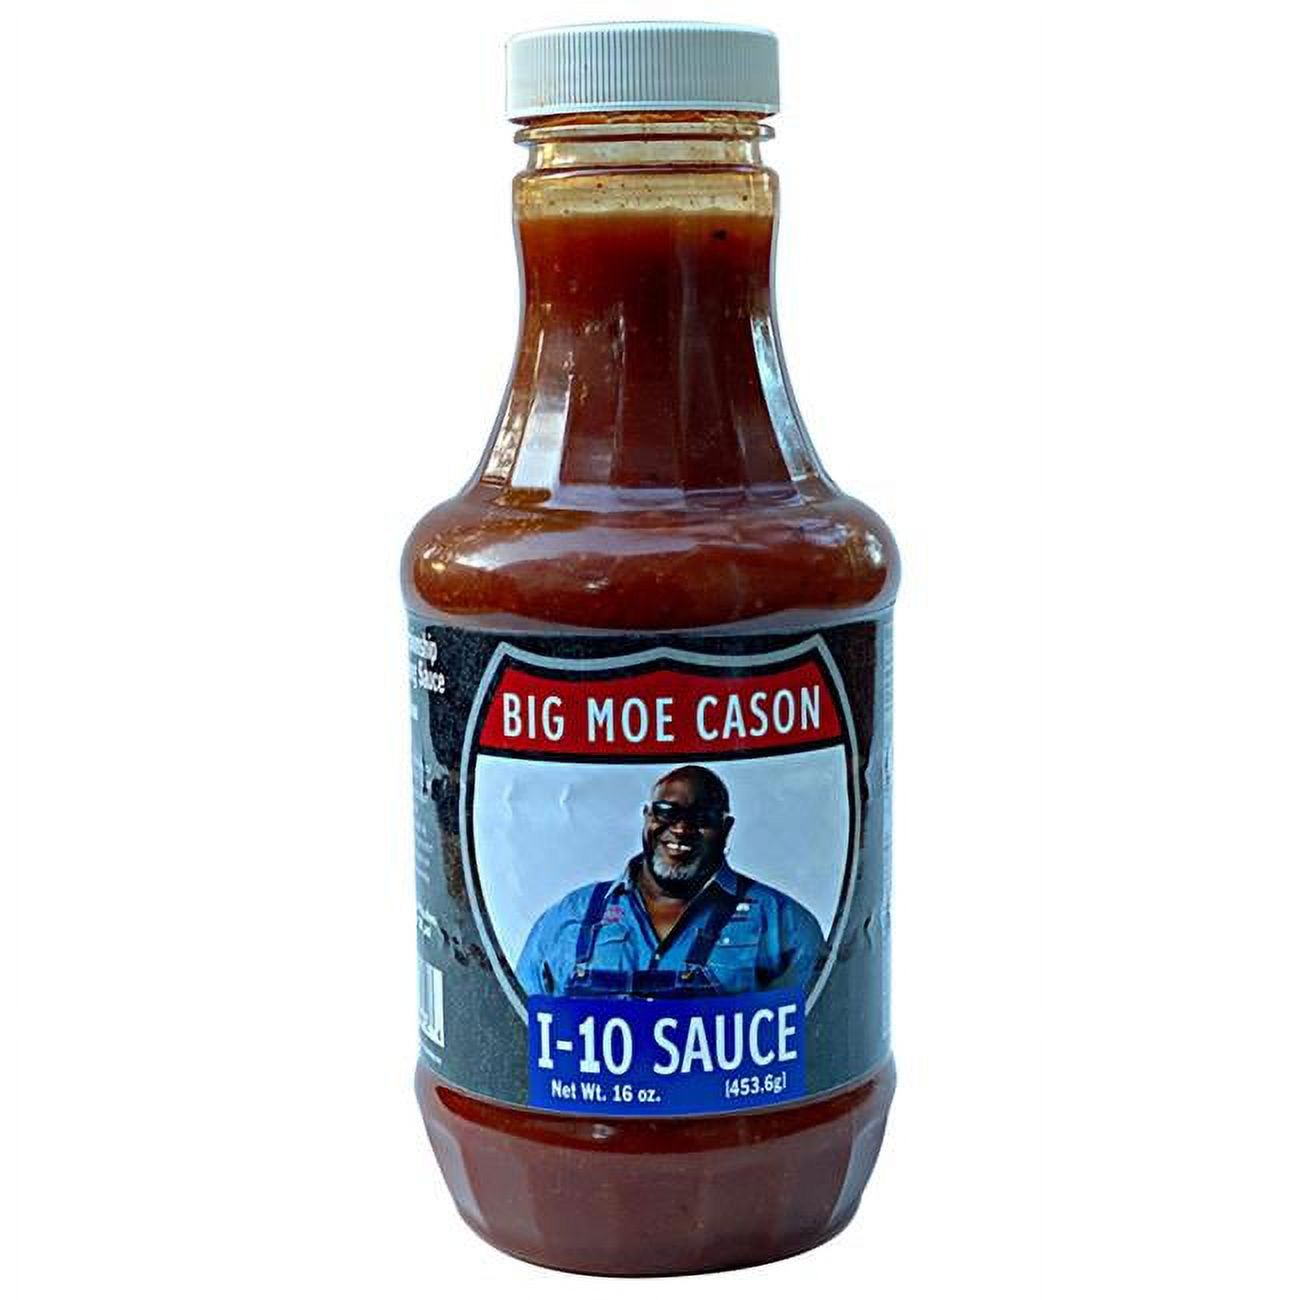 Big Moe Cason I-10 Sauce Spicy/Sweet BBQ Sauce 16 ounce - image 1 of 1